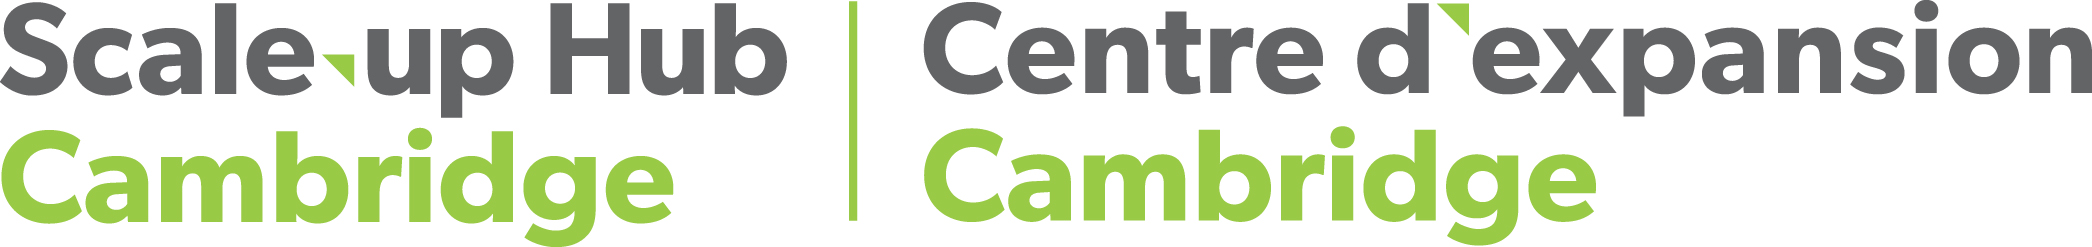 Scale-up Hub Cambridge Logo